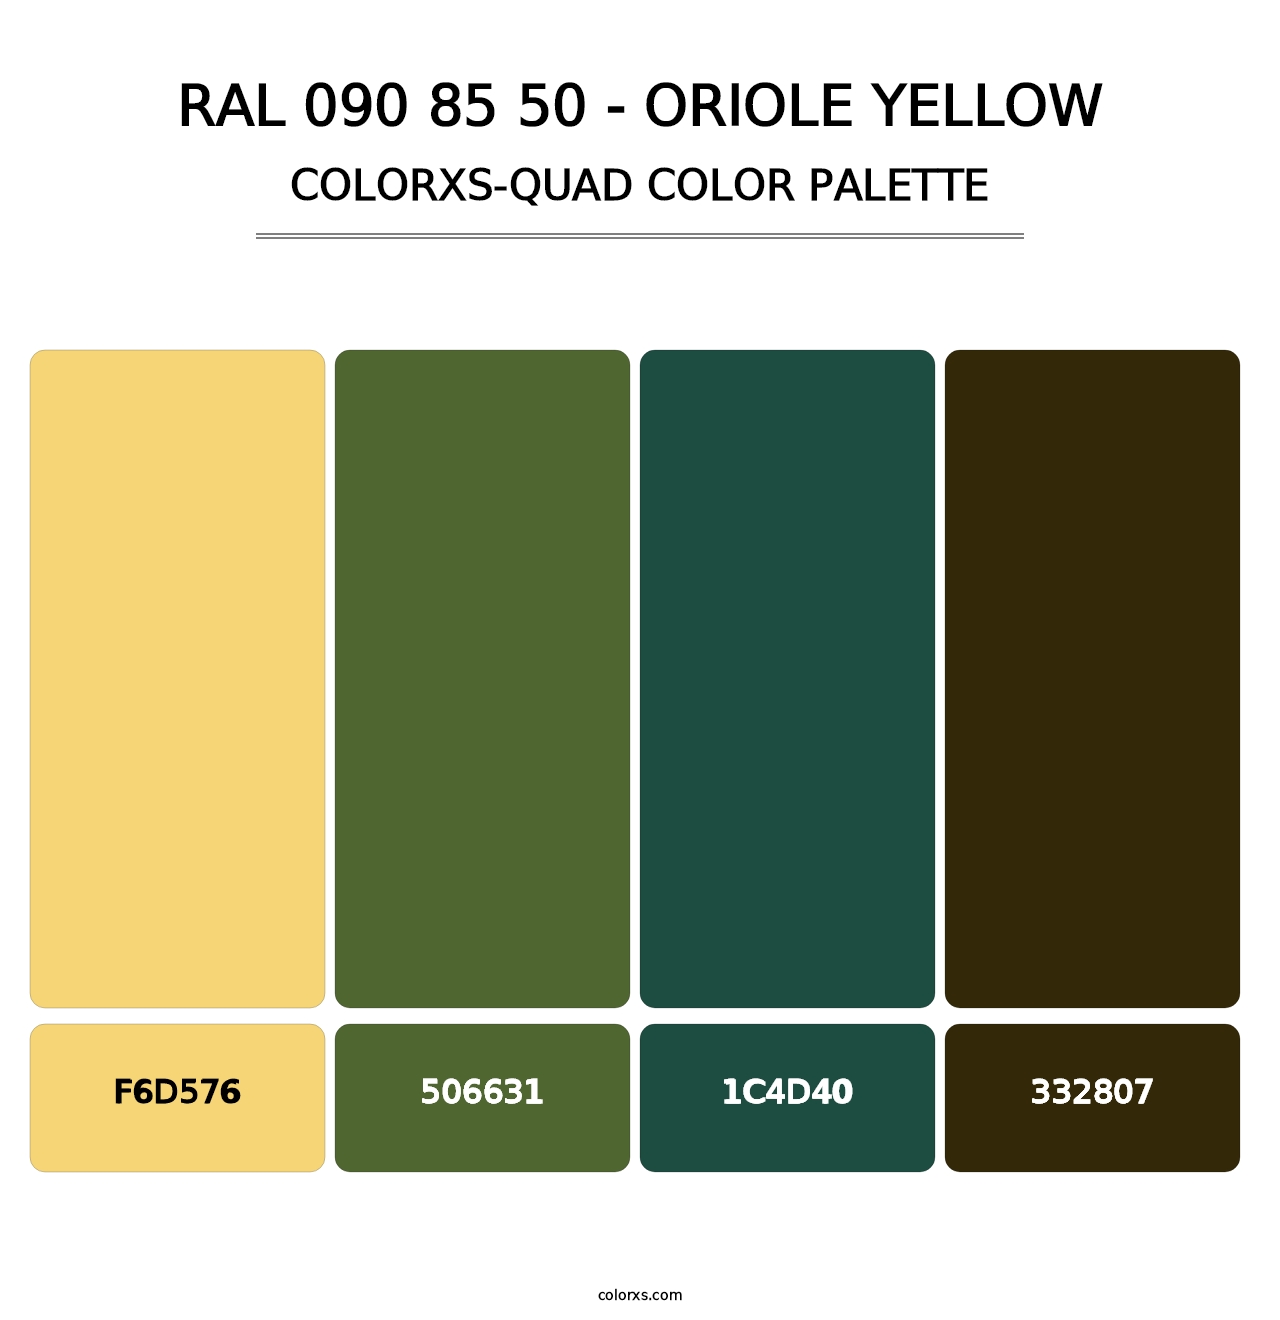 RAL 090 85 50 - Oriole Yellow - Colorxs Quad Palette